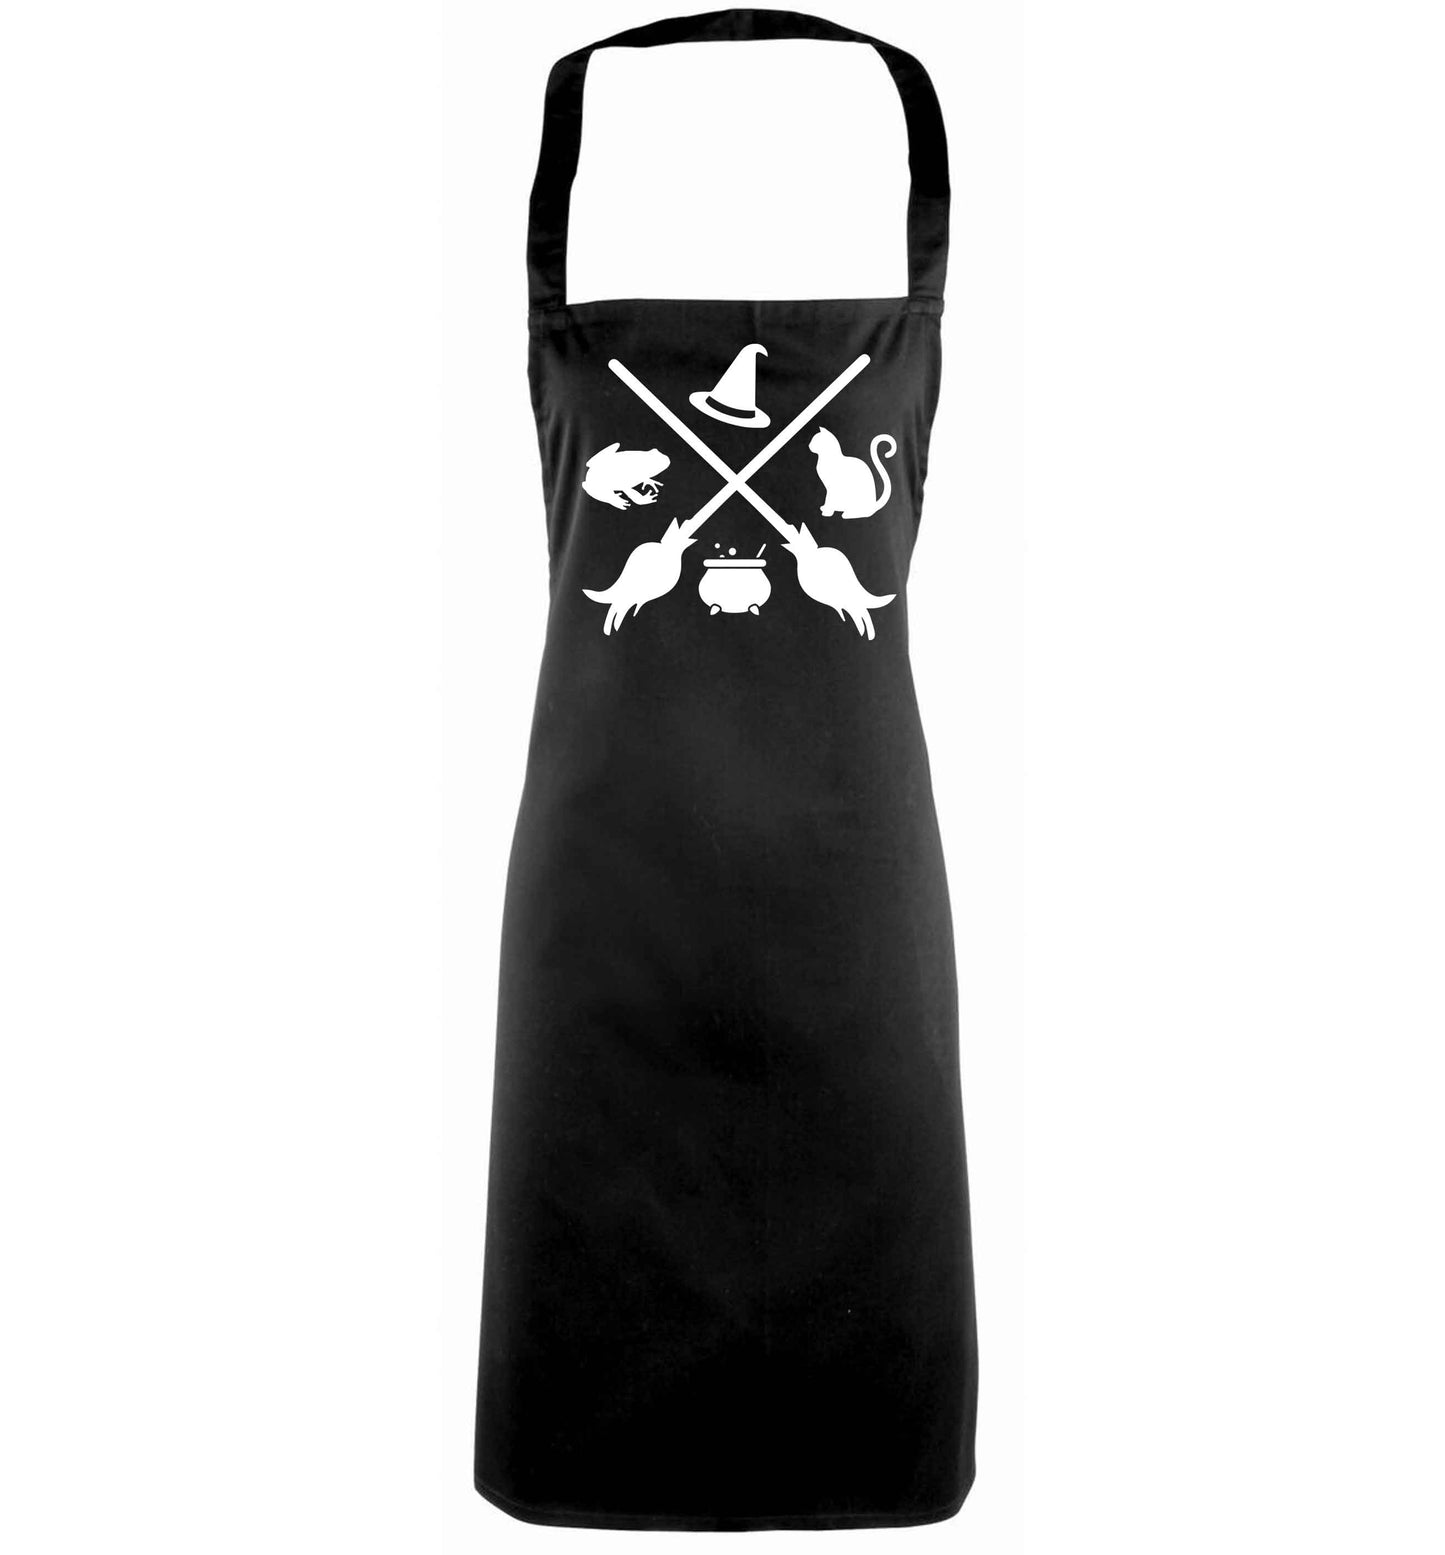 Witch symbol black apron